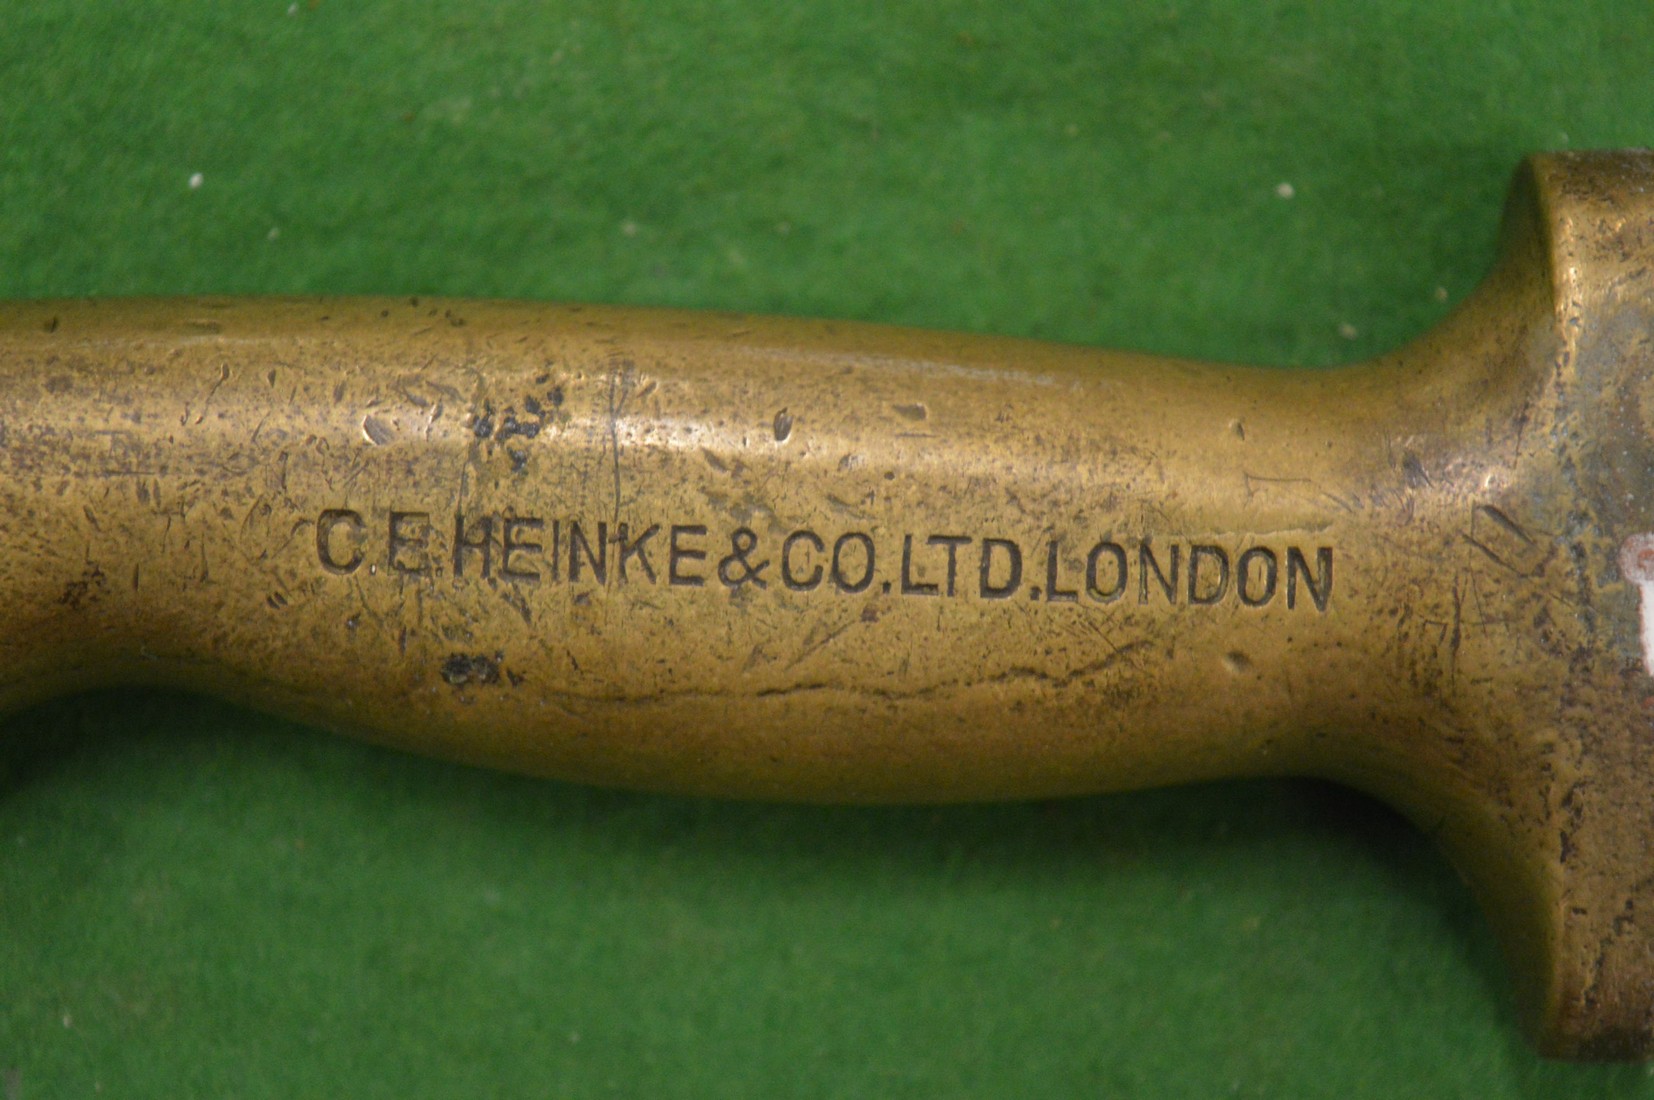 A C E Heinke & Co Ltd London divers knife. - Bild 3 aus 3